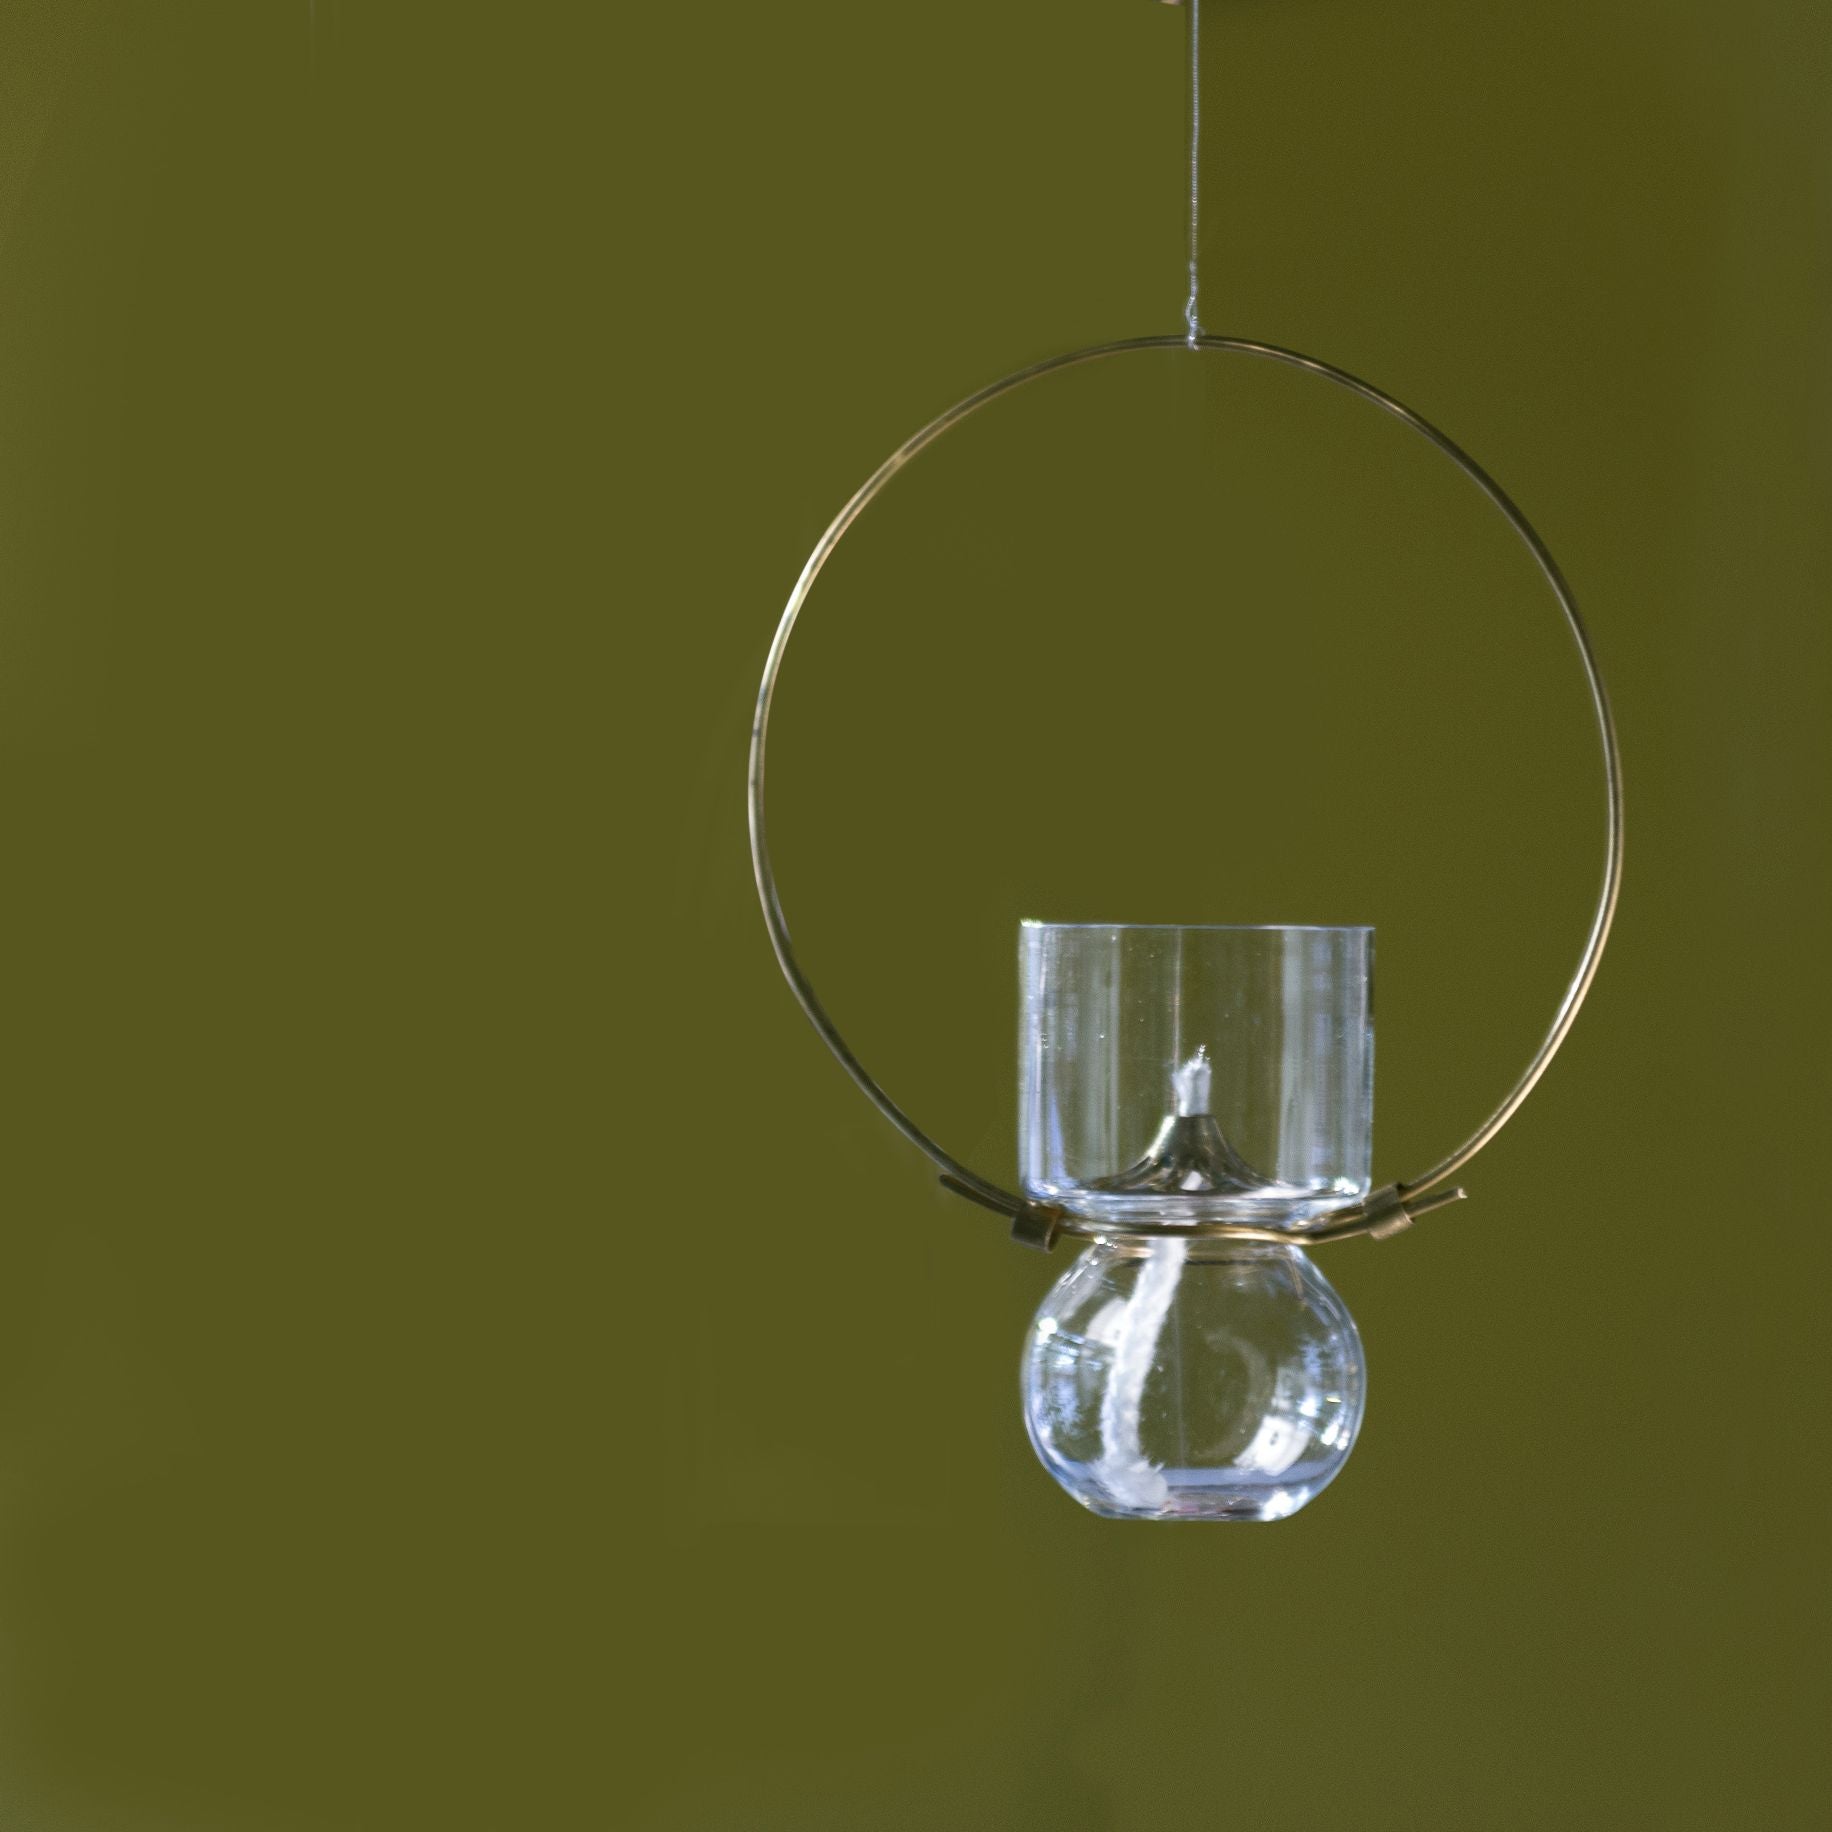 Amaya Lamp Attatchment- Hanging & Wall Home Objects Lighting & Fragrances, Diya